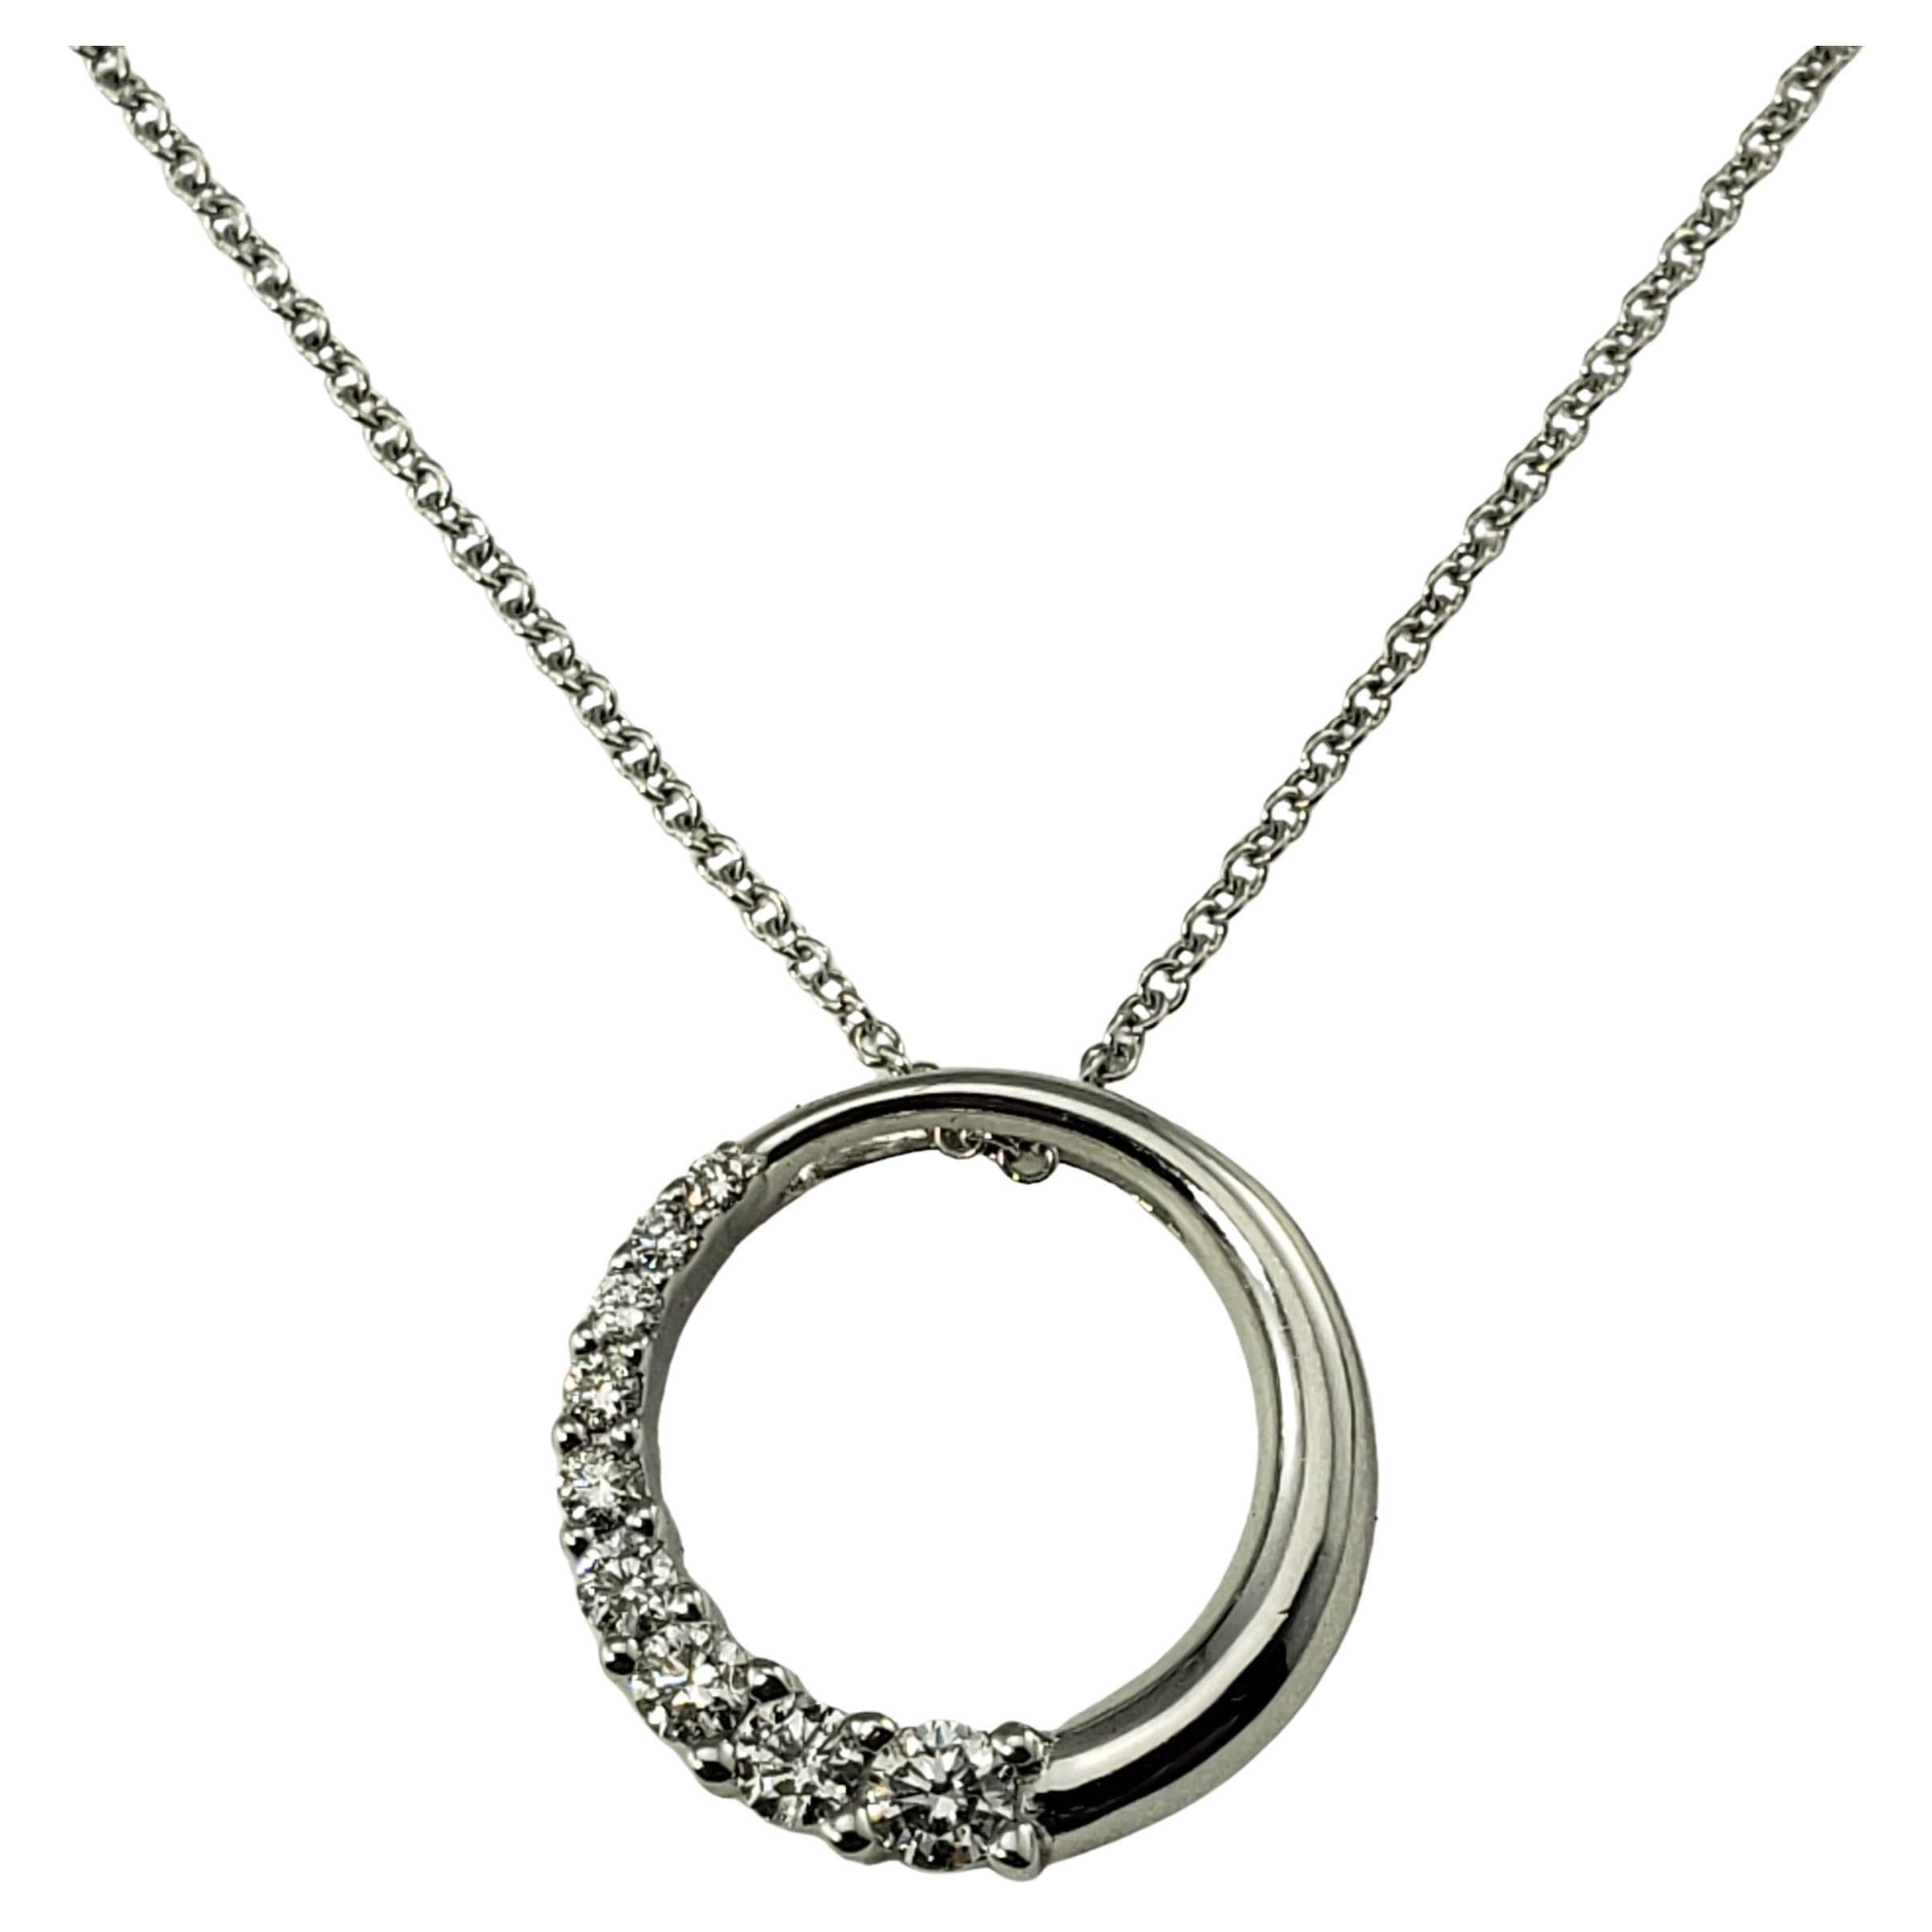 14 Karat White Gold and Diamond Circle Pendant Necklace